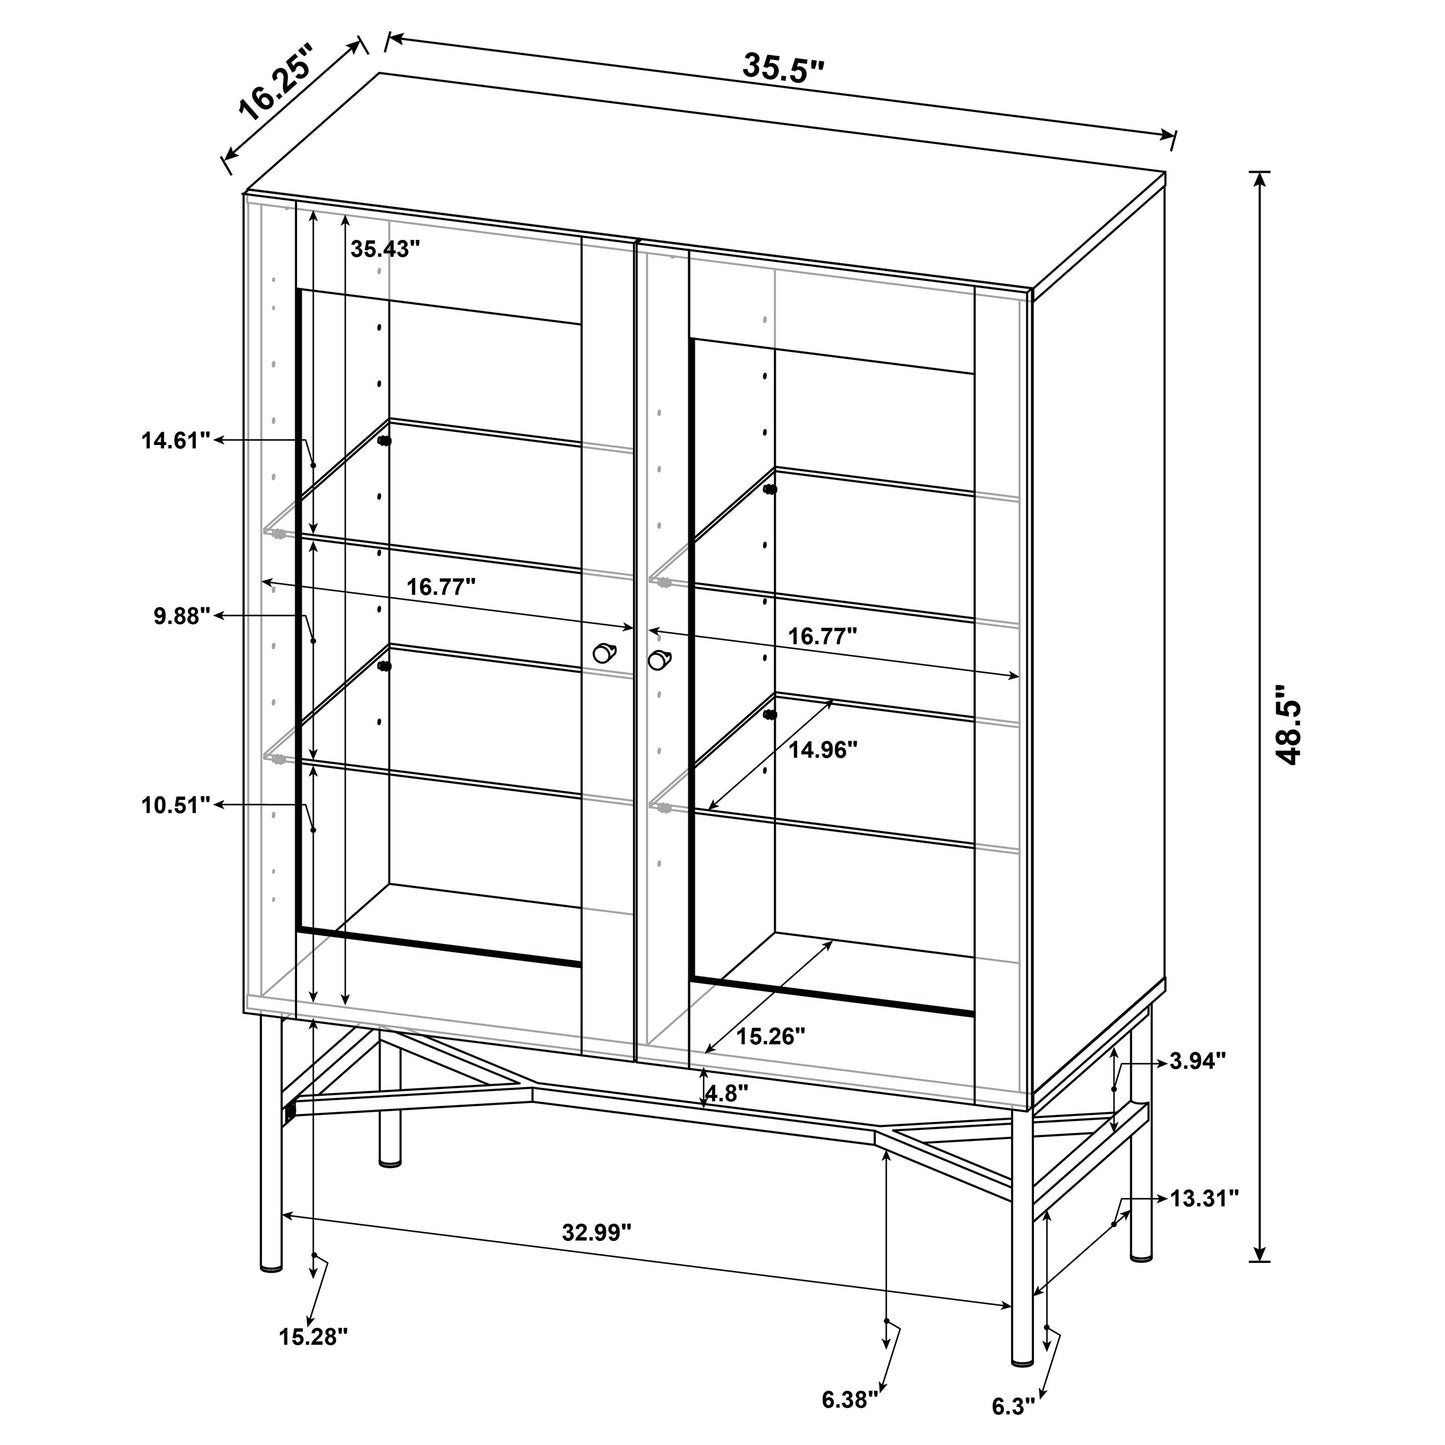 Bonilla 2-door Accent Cabinet with Glass Shelves